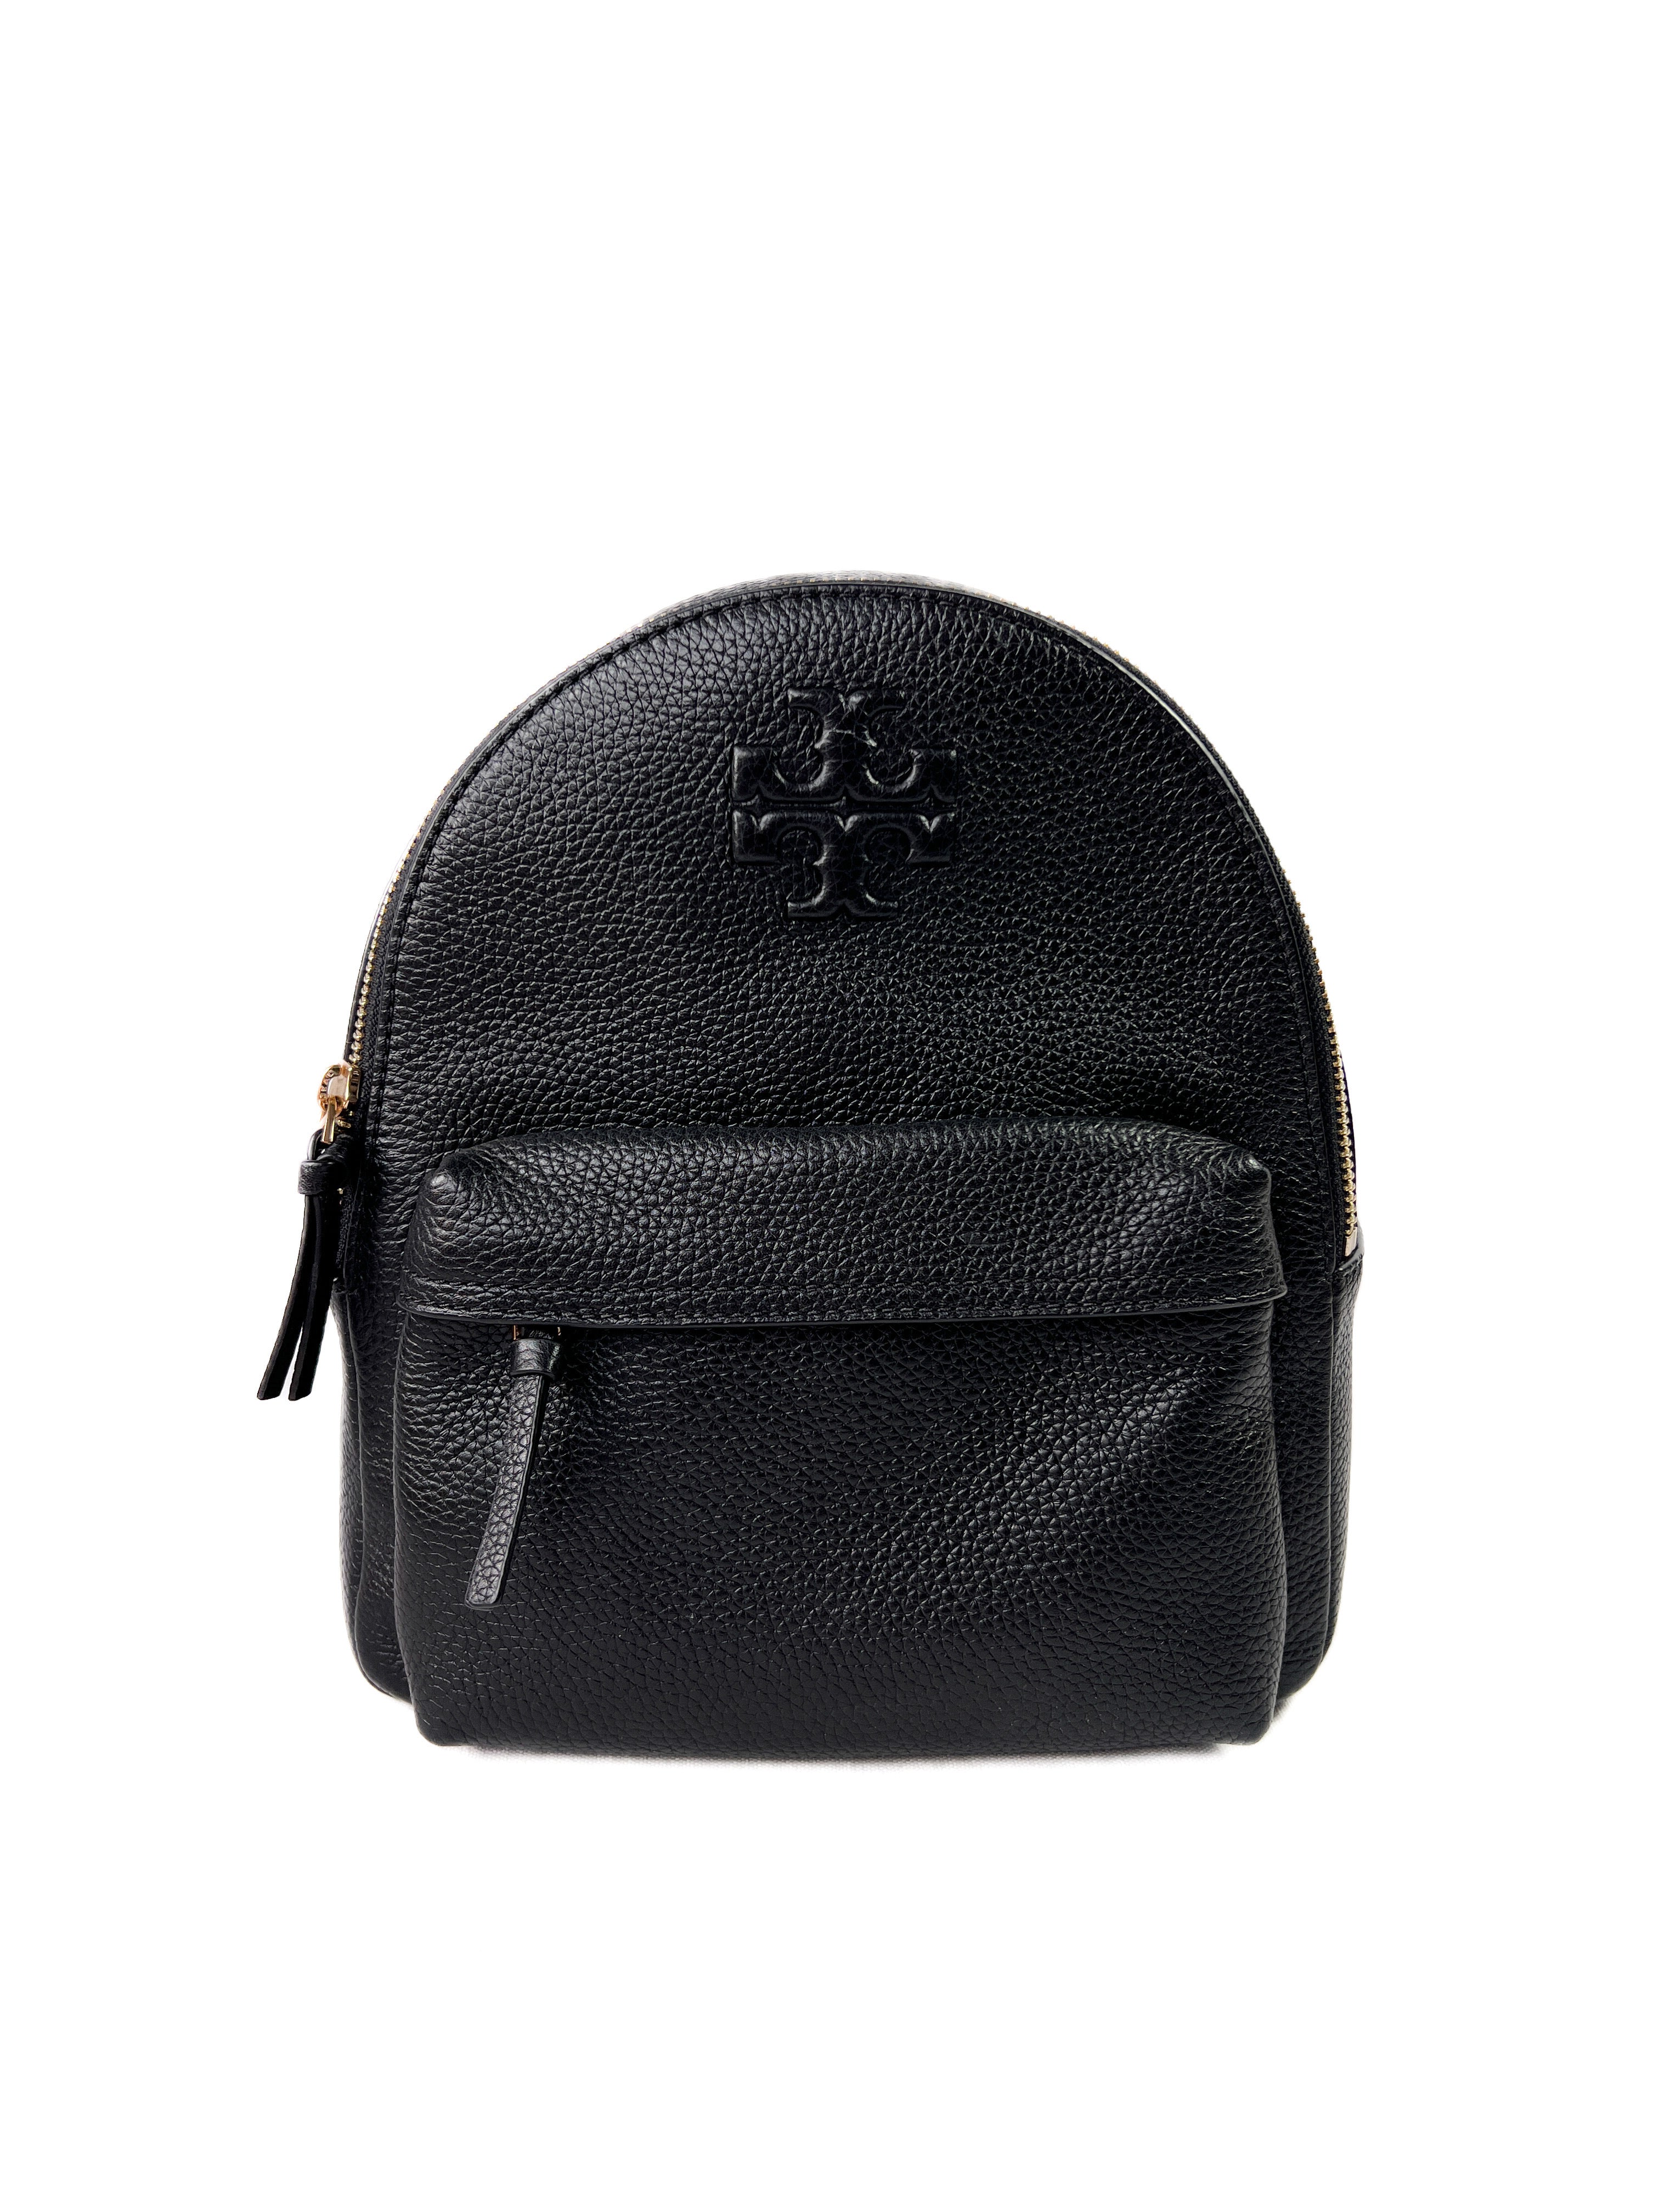  Tory Burch Women's Thea Mini Backpack (Black) : Clothing, Shoes  & Jewelry